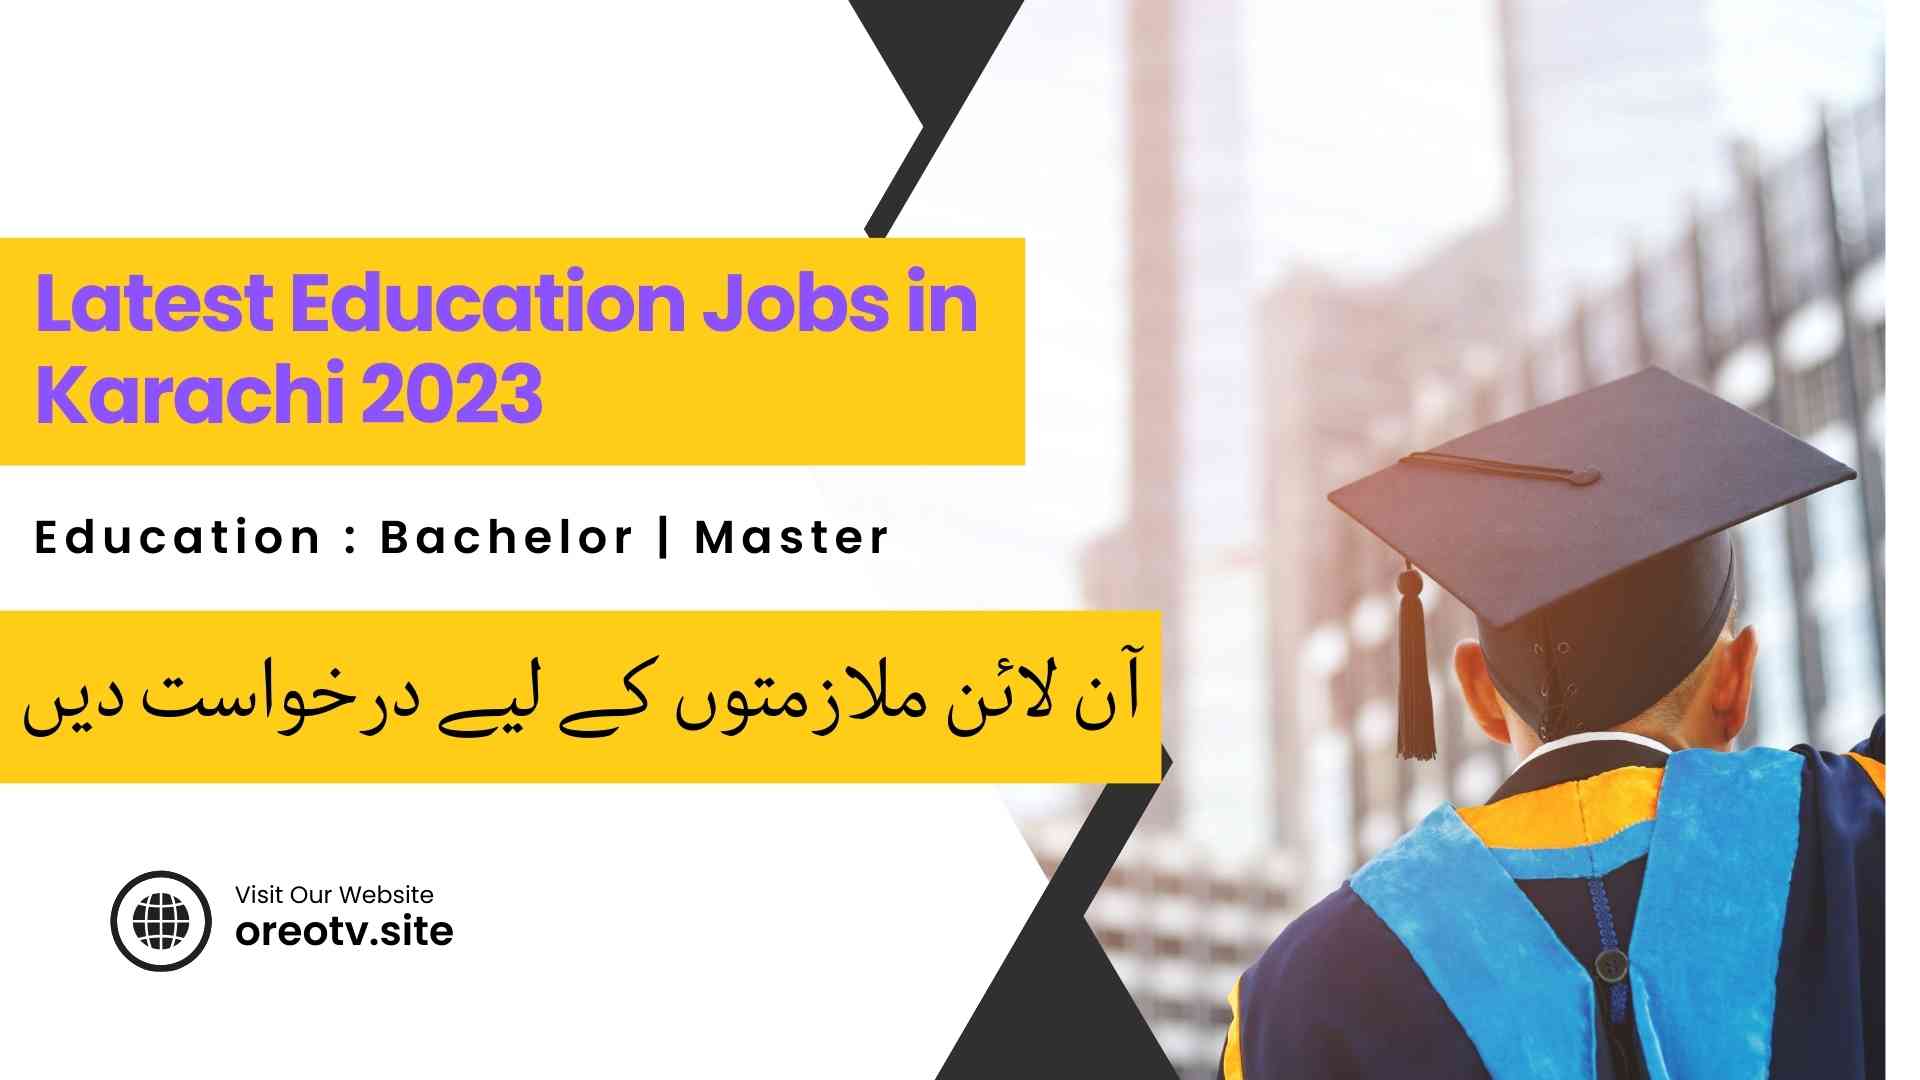 Latest Education Jobs in Karachi 2023